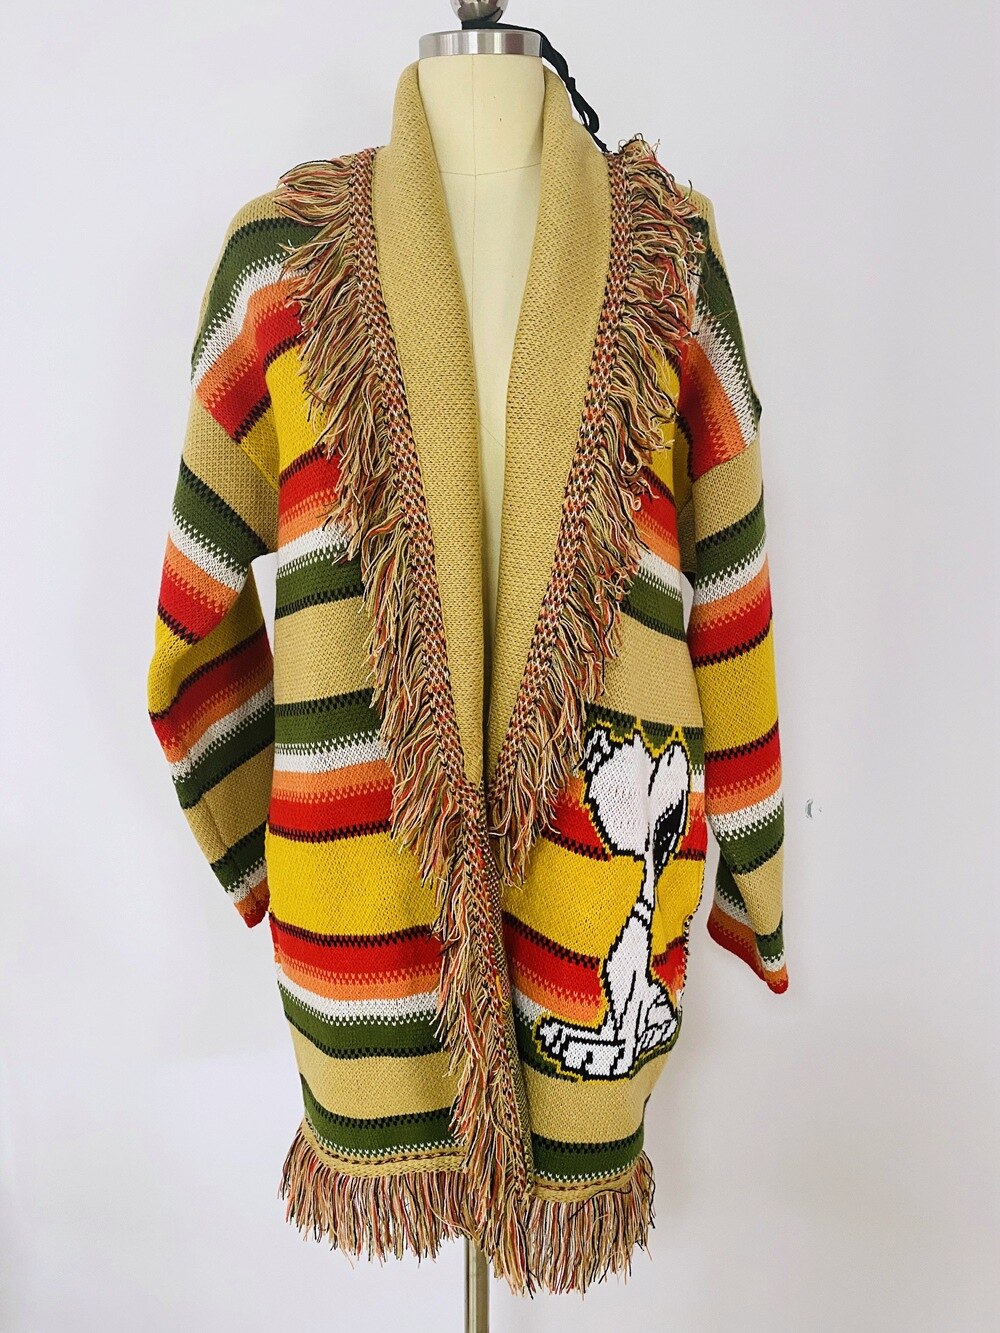 Jacket Wool Rainbow Striped Sweater Cardigan Cartoon Jacquard Knit Mid-length Coats Tops